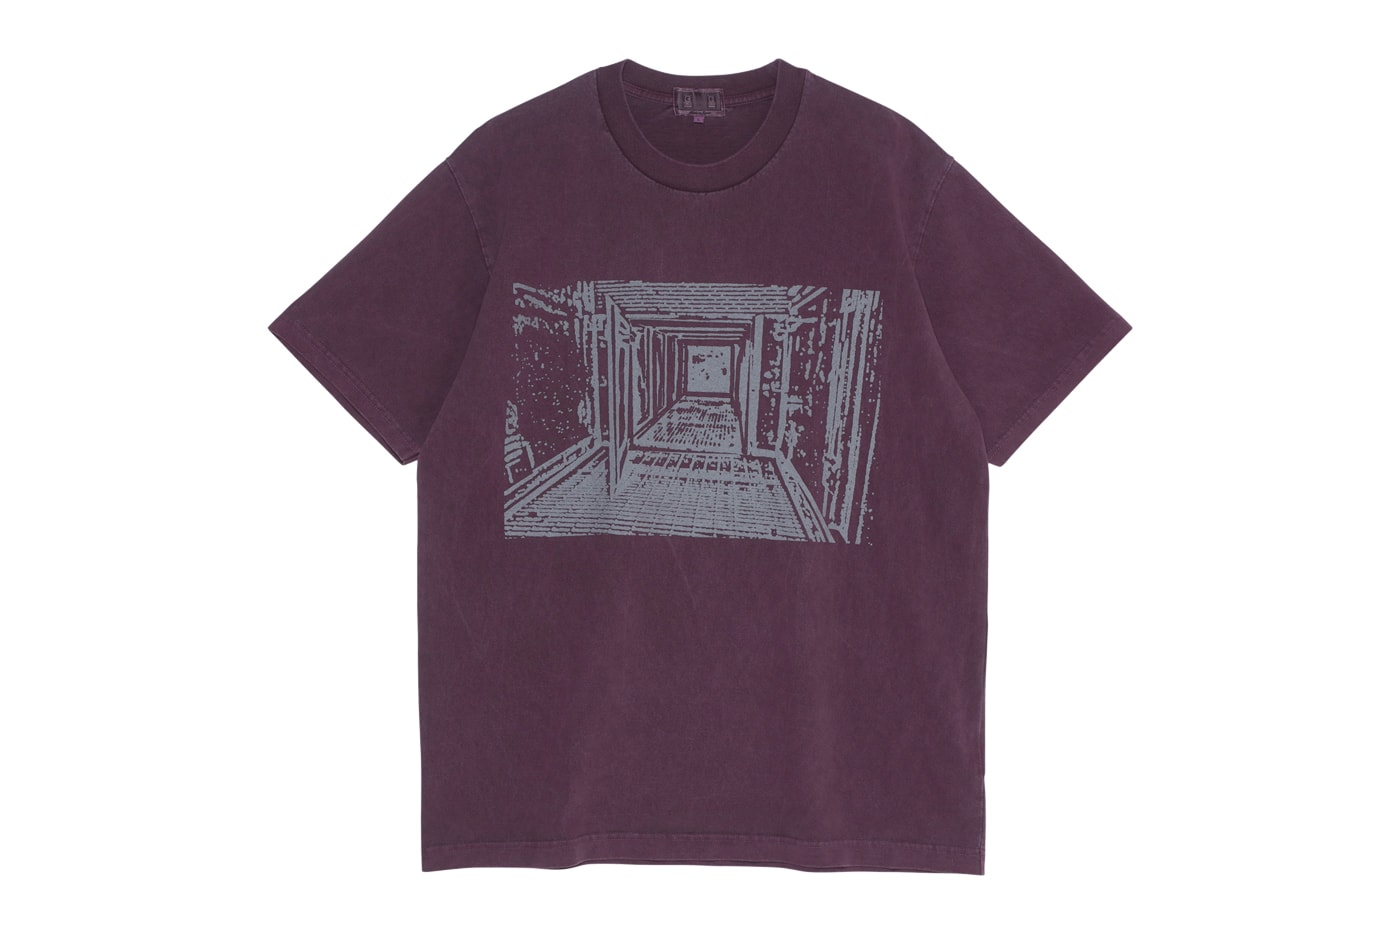 Cav Empt Overdye Passage T-shirt & Noise C2 Shirt & Shorts release info drop date price cavempt.com sk8thing toby feltwell fw19 fall/winter 2019